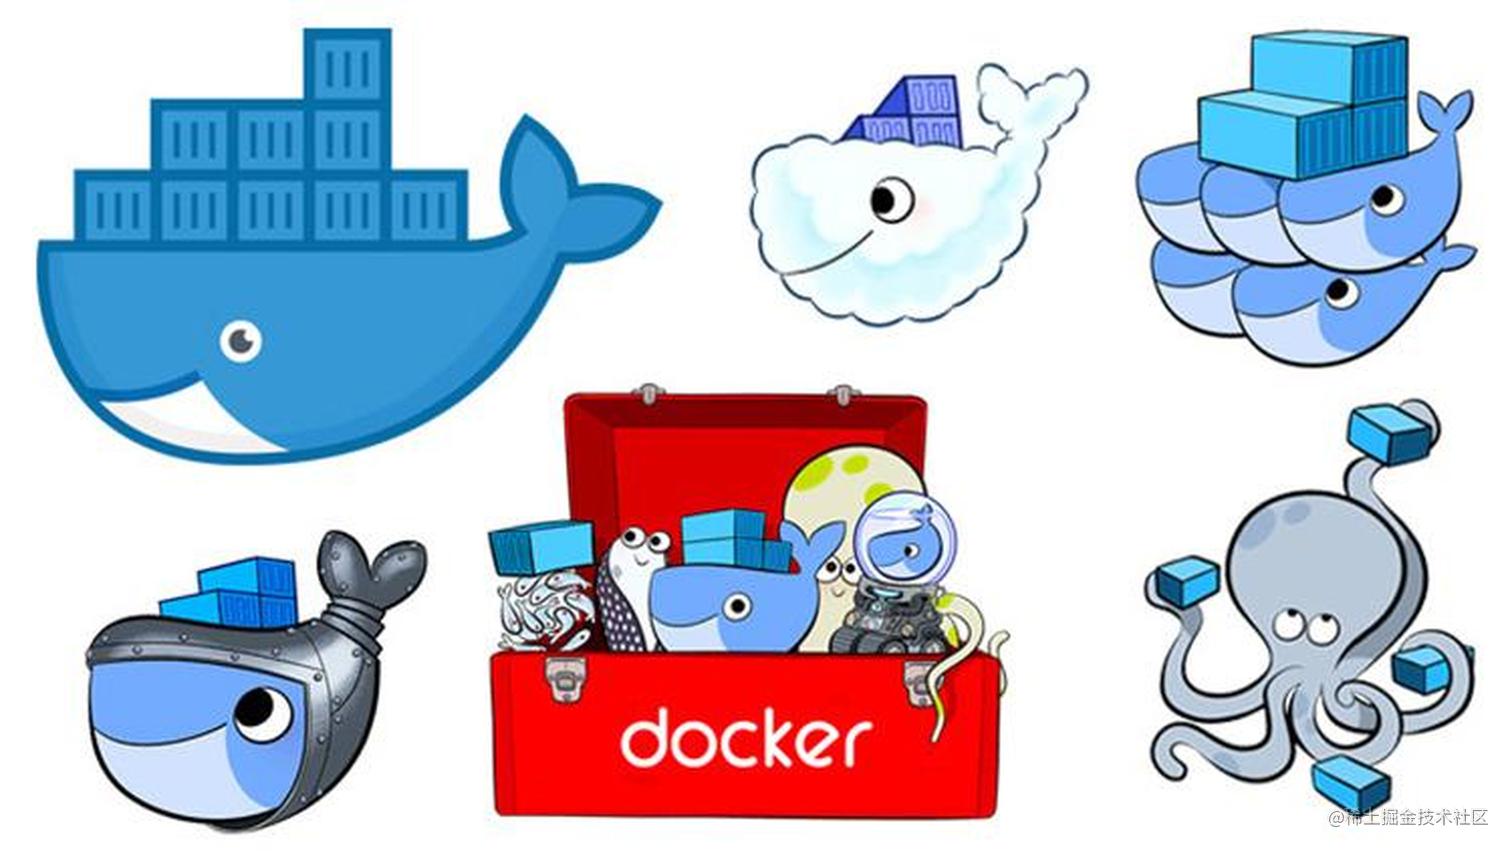 使用 Docker + DockerCompose 封装 web 应用